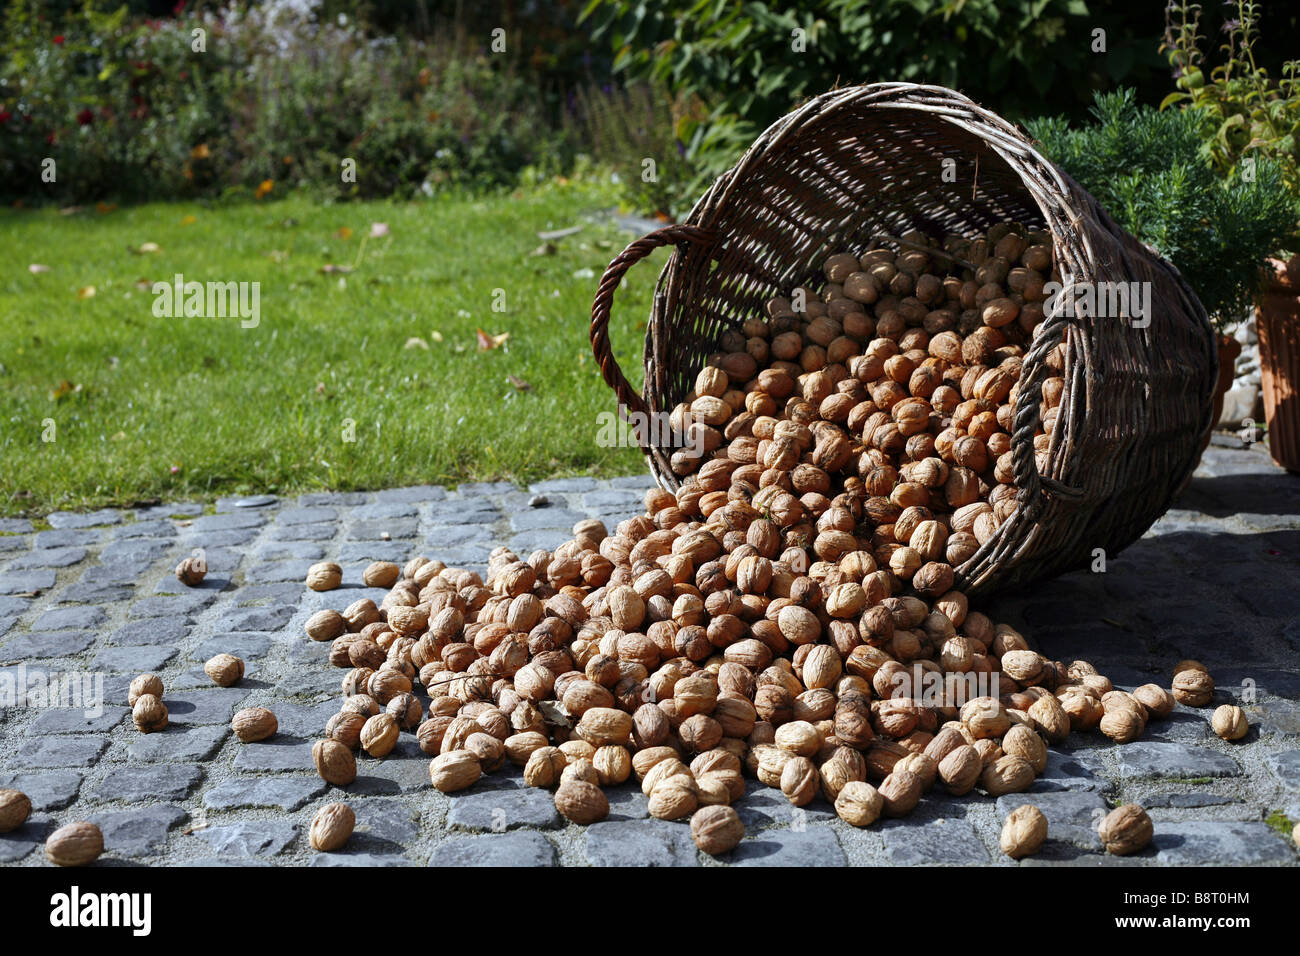 walnut (Juglans regia), overturned basket with walnuts Stock Photo